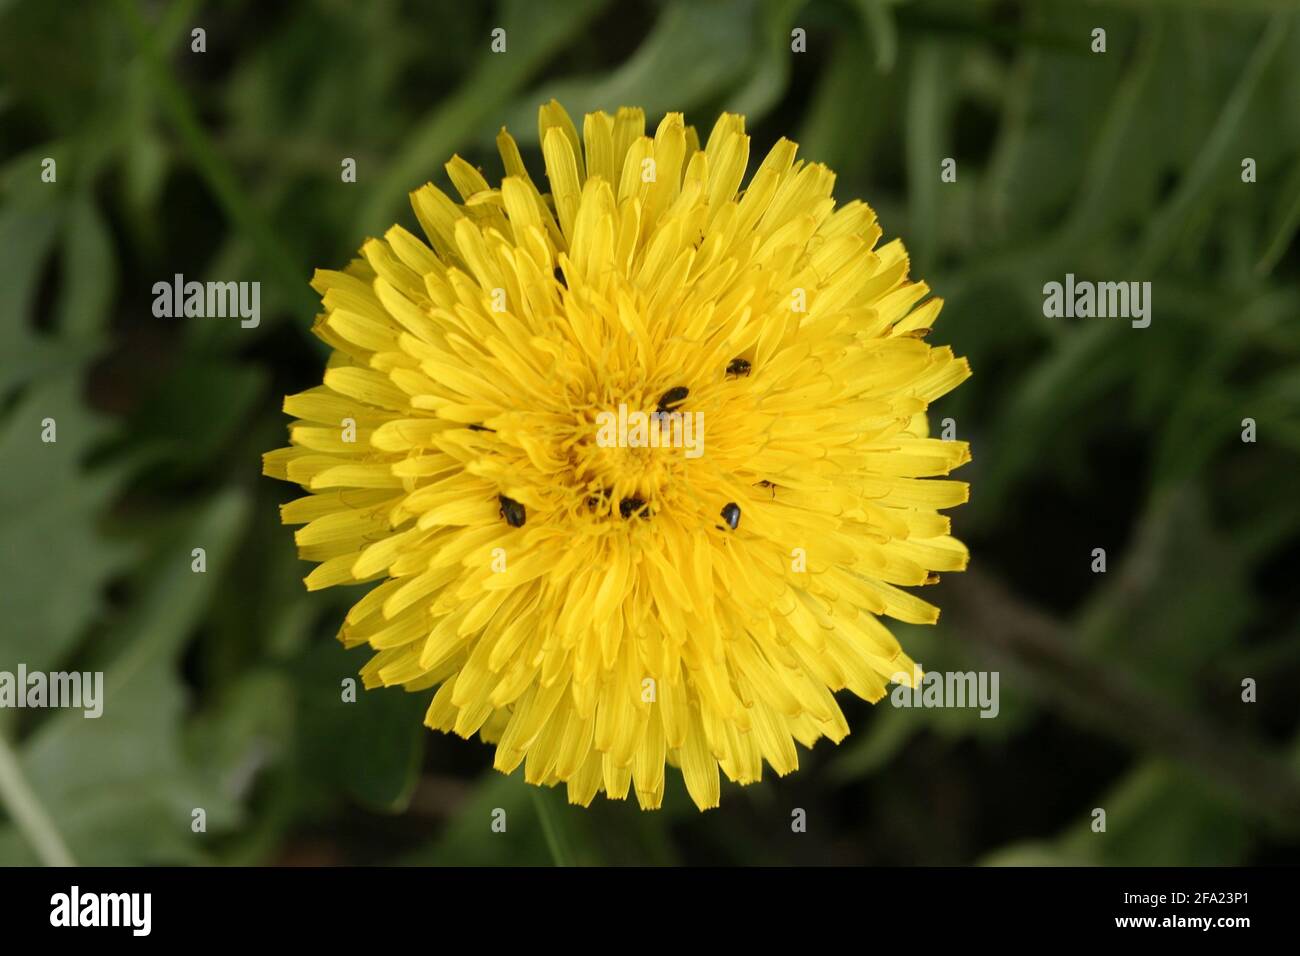 sap beetles, sap-feeding beetles (Meligethes spec.), in the flowers of dandelion, Austria Stock Photo